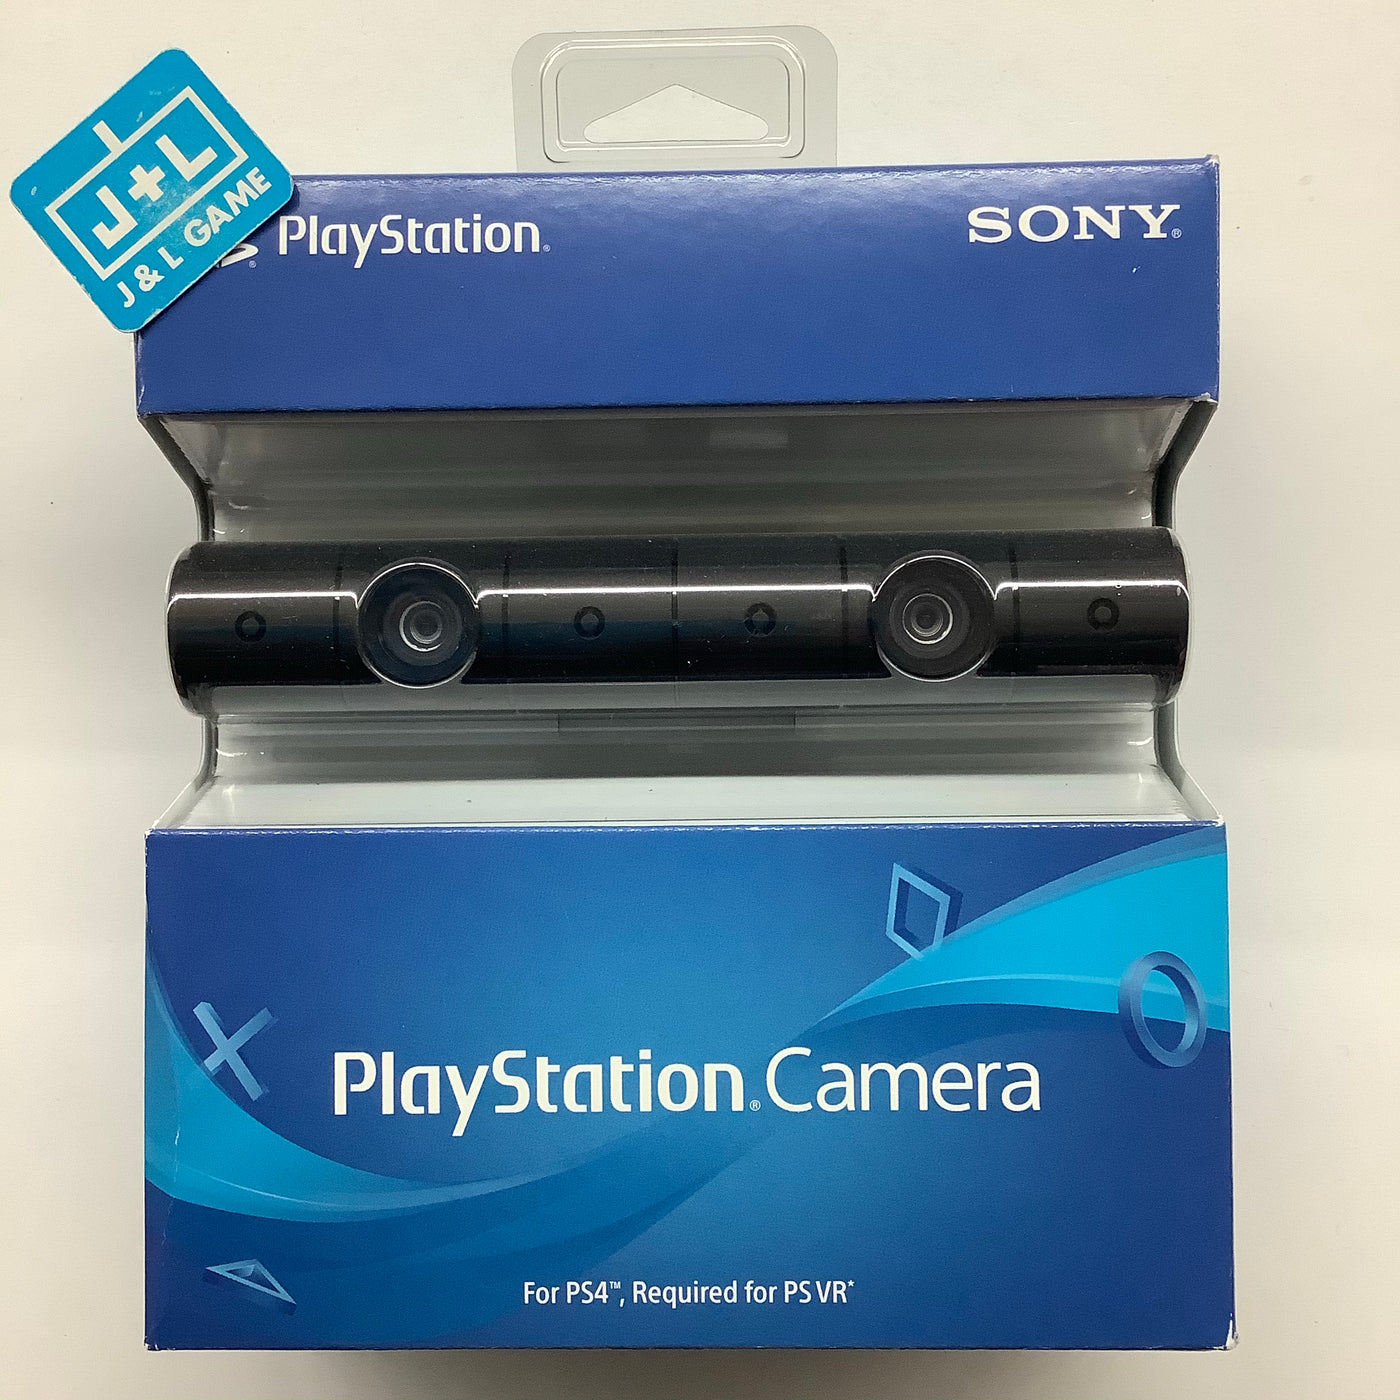 SONY PlayStation 4 Camera V 2 - (PS4) PlayStation 4